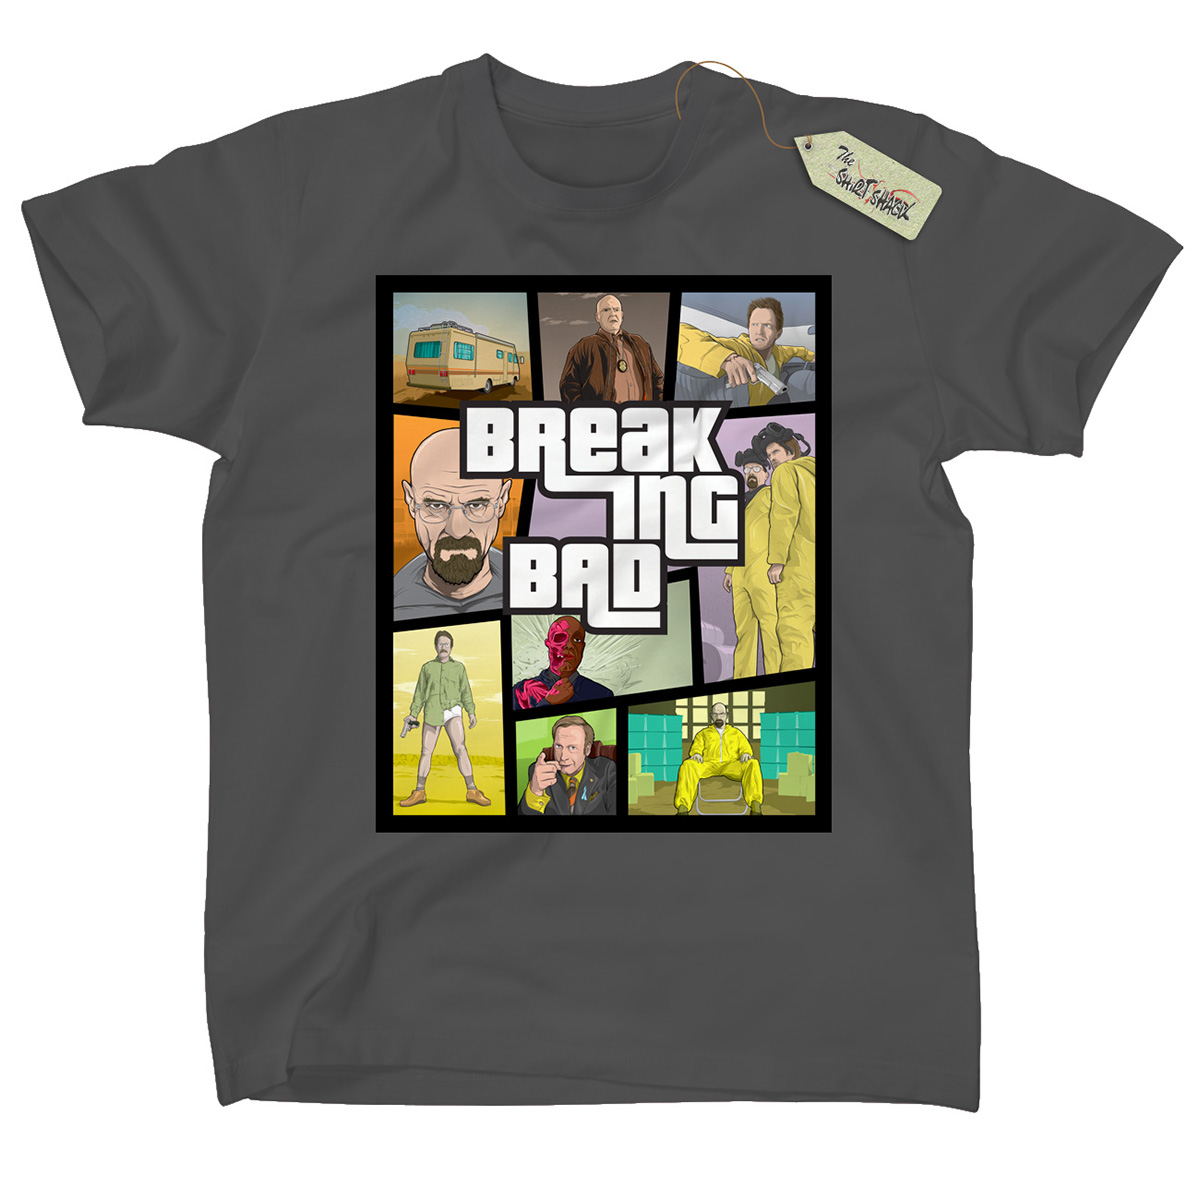 Breaking Bad GTA style t-shirt design on Behance